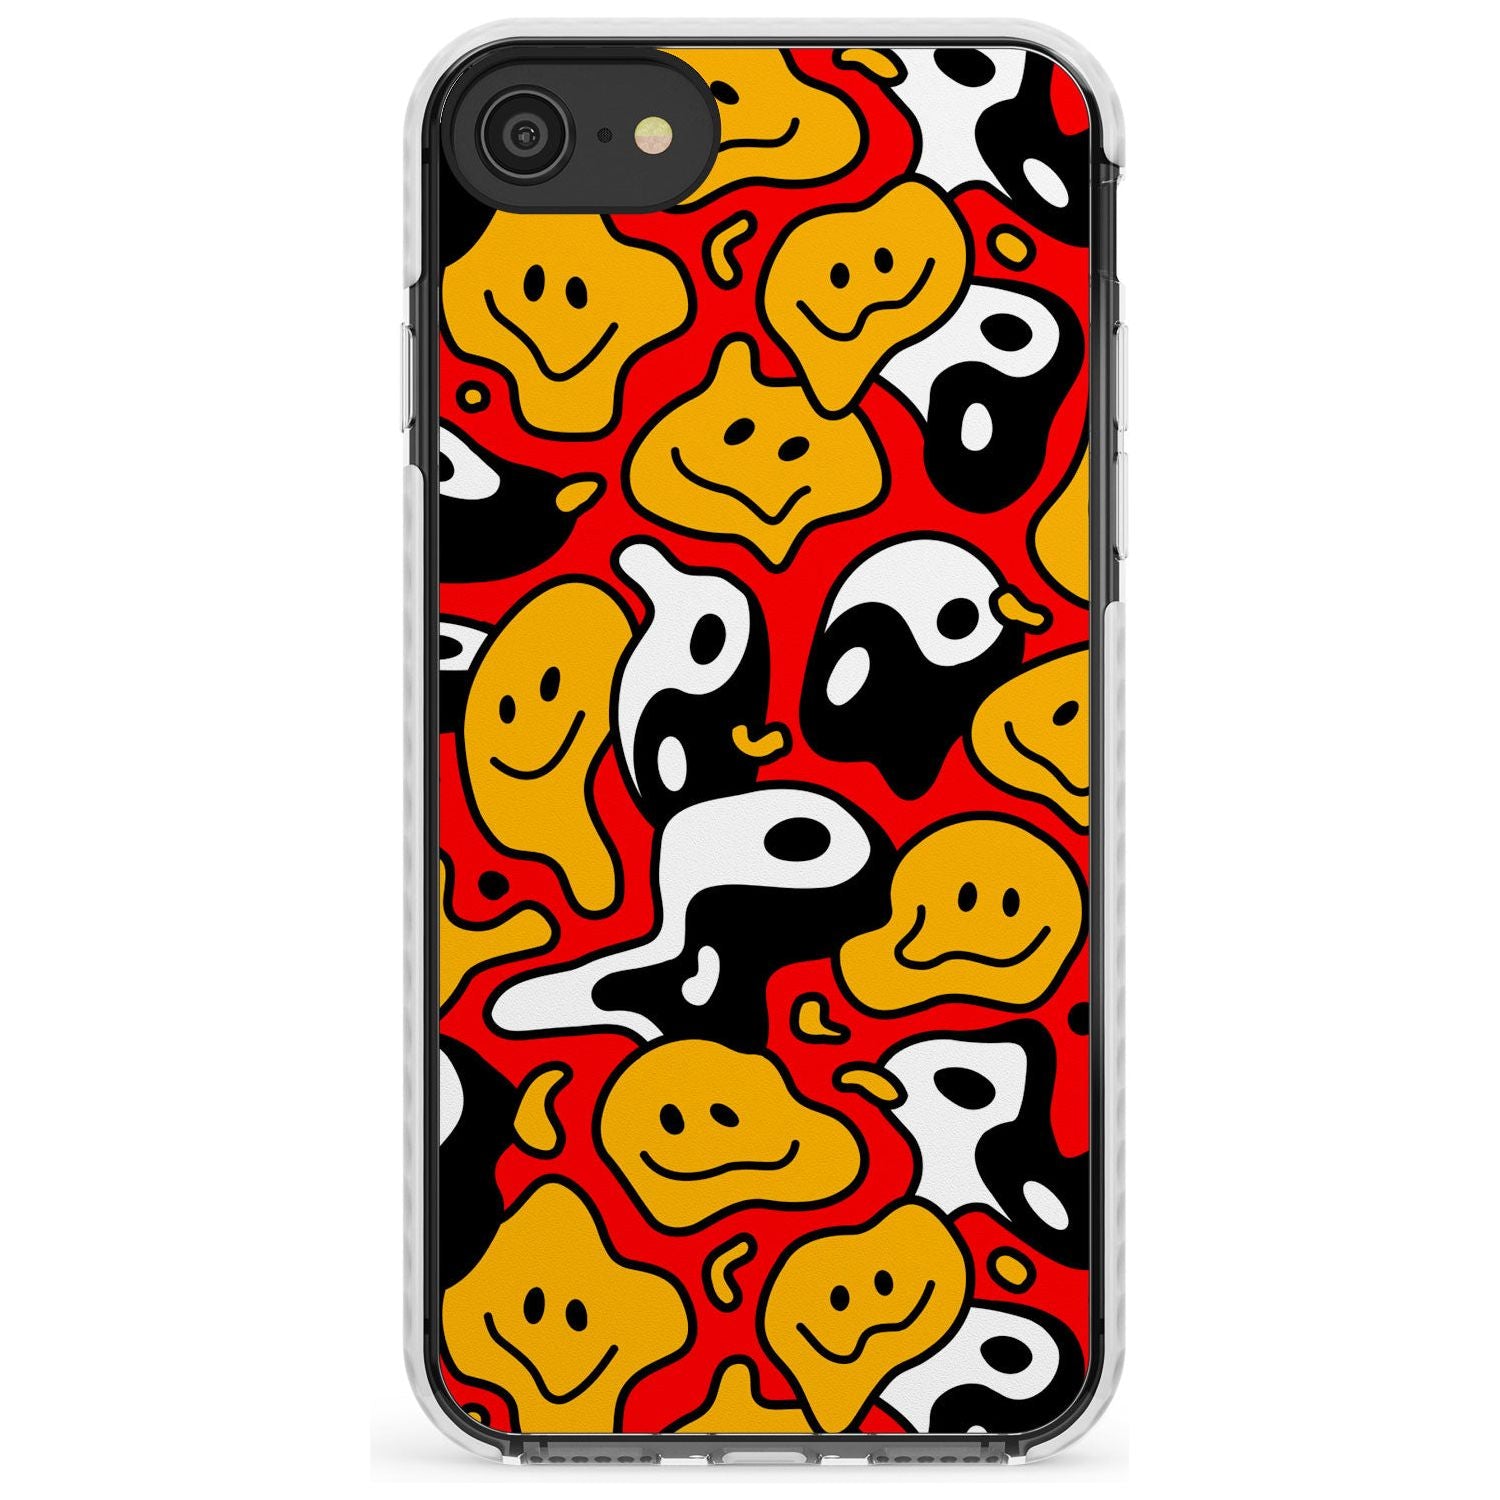 Yin Yang Acid Face Impact Phone Case for iPhone SE 8 7 Plus